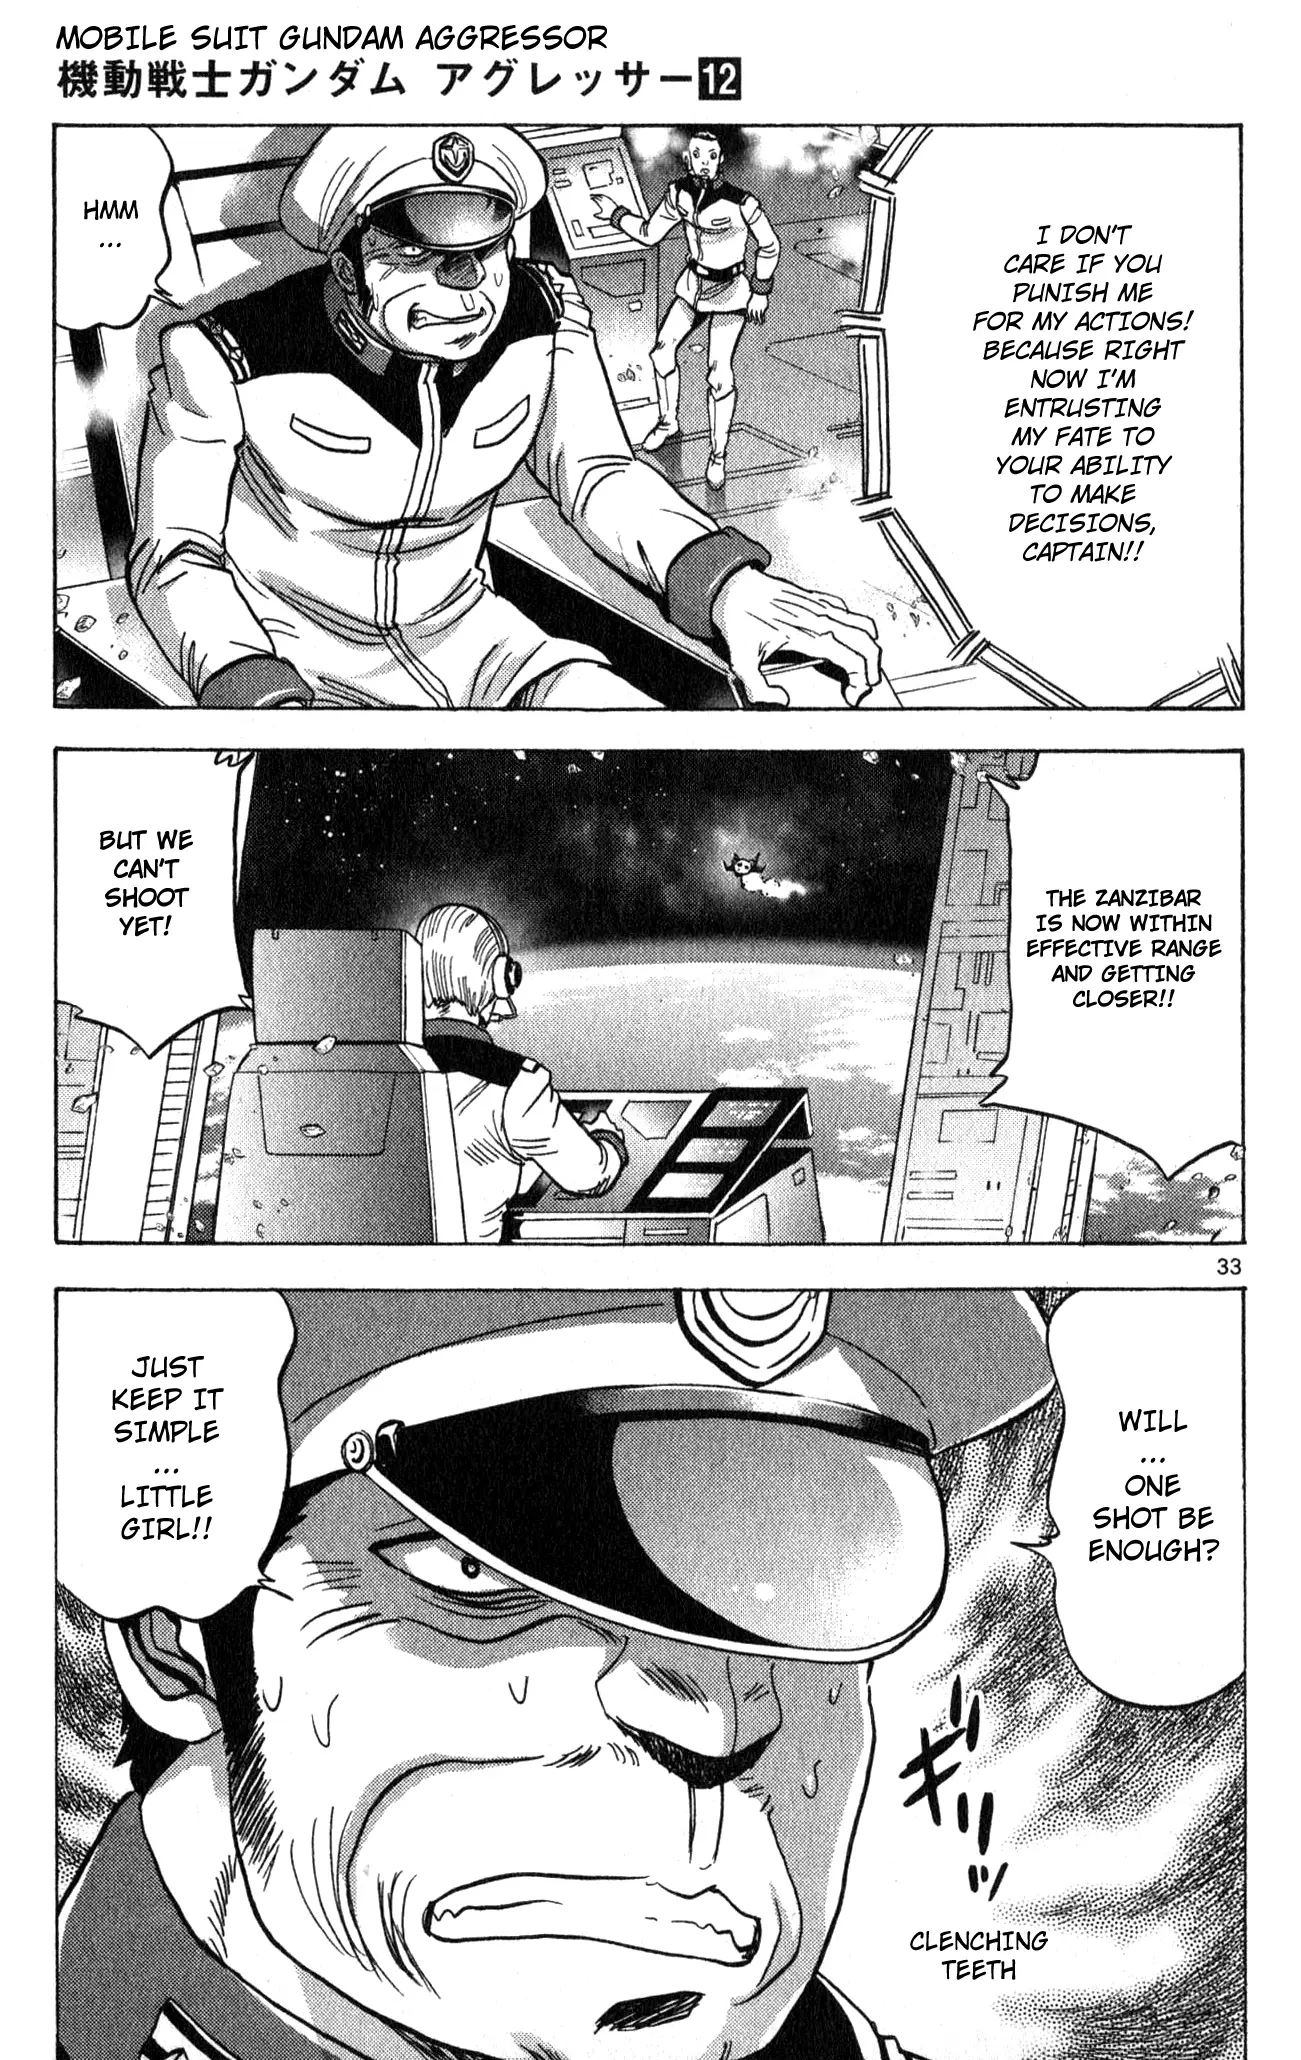 Mobile Suit Gundam Aggressor - 58 page 29-61cba91d